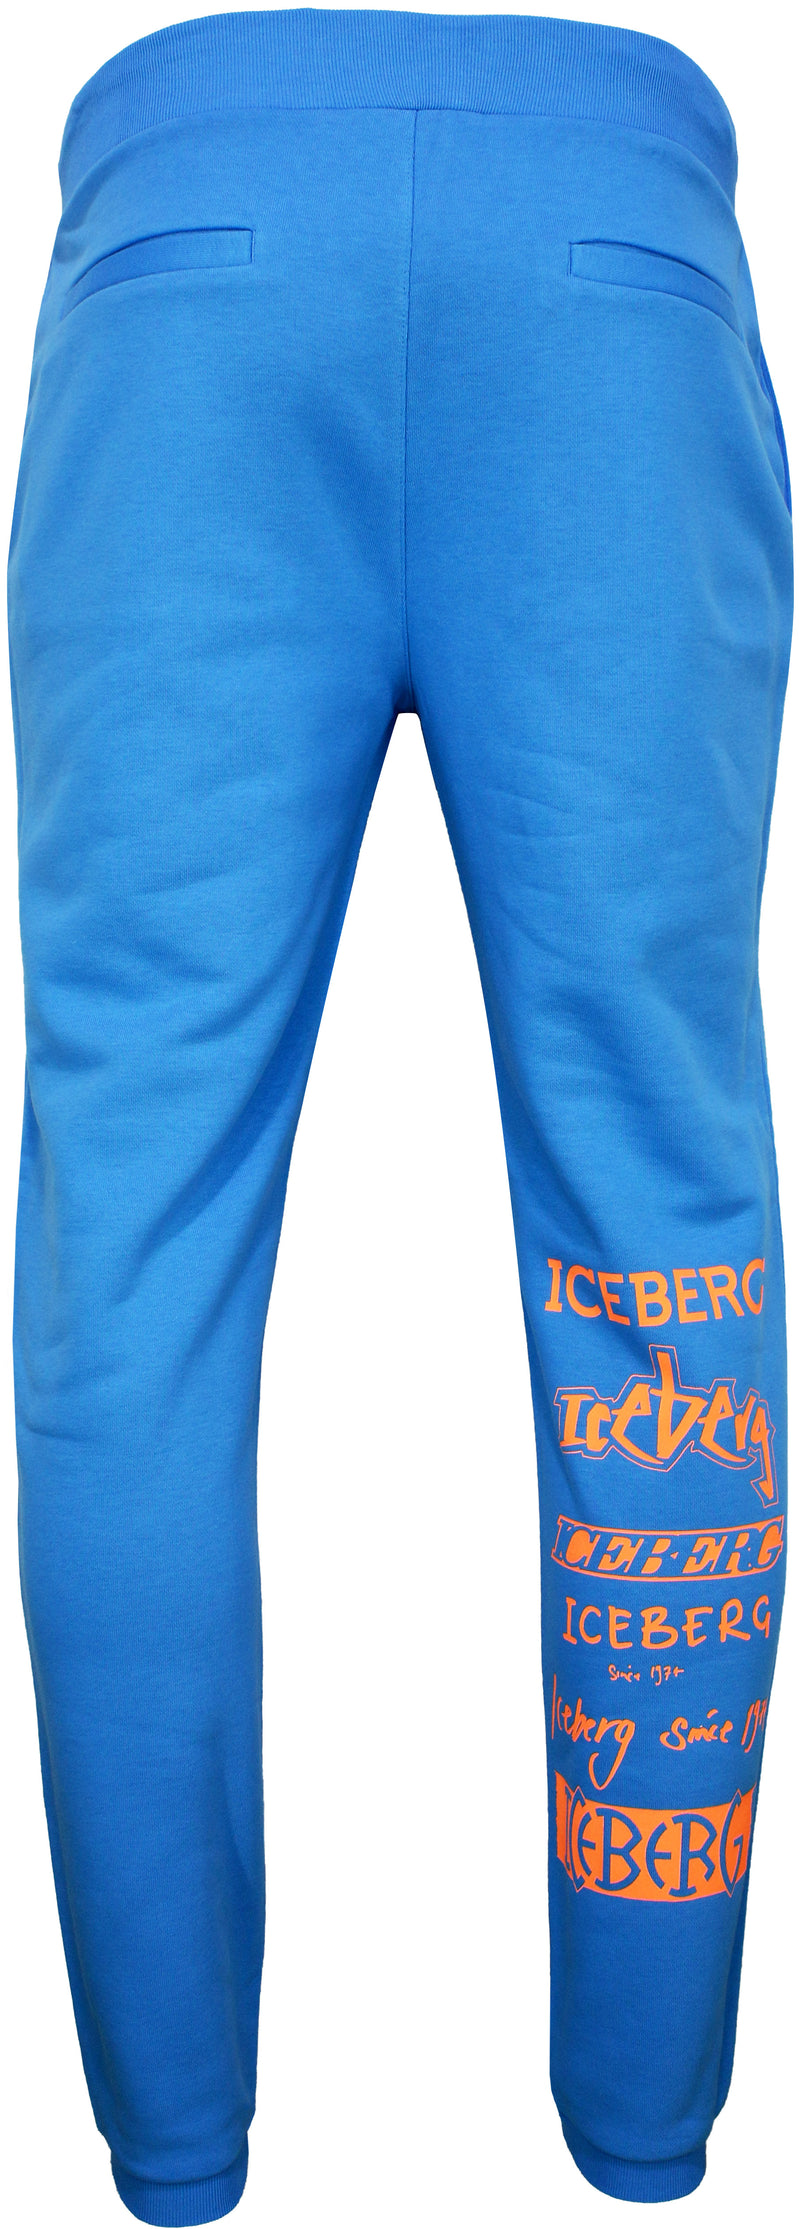 Men's Iceberg Since 1974 Logo Sweatpants